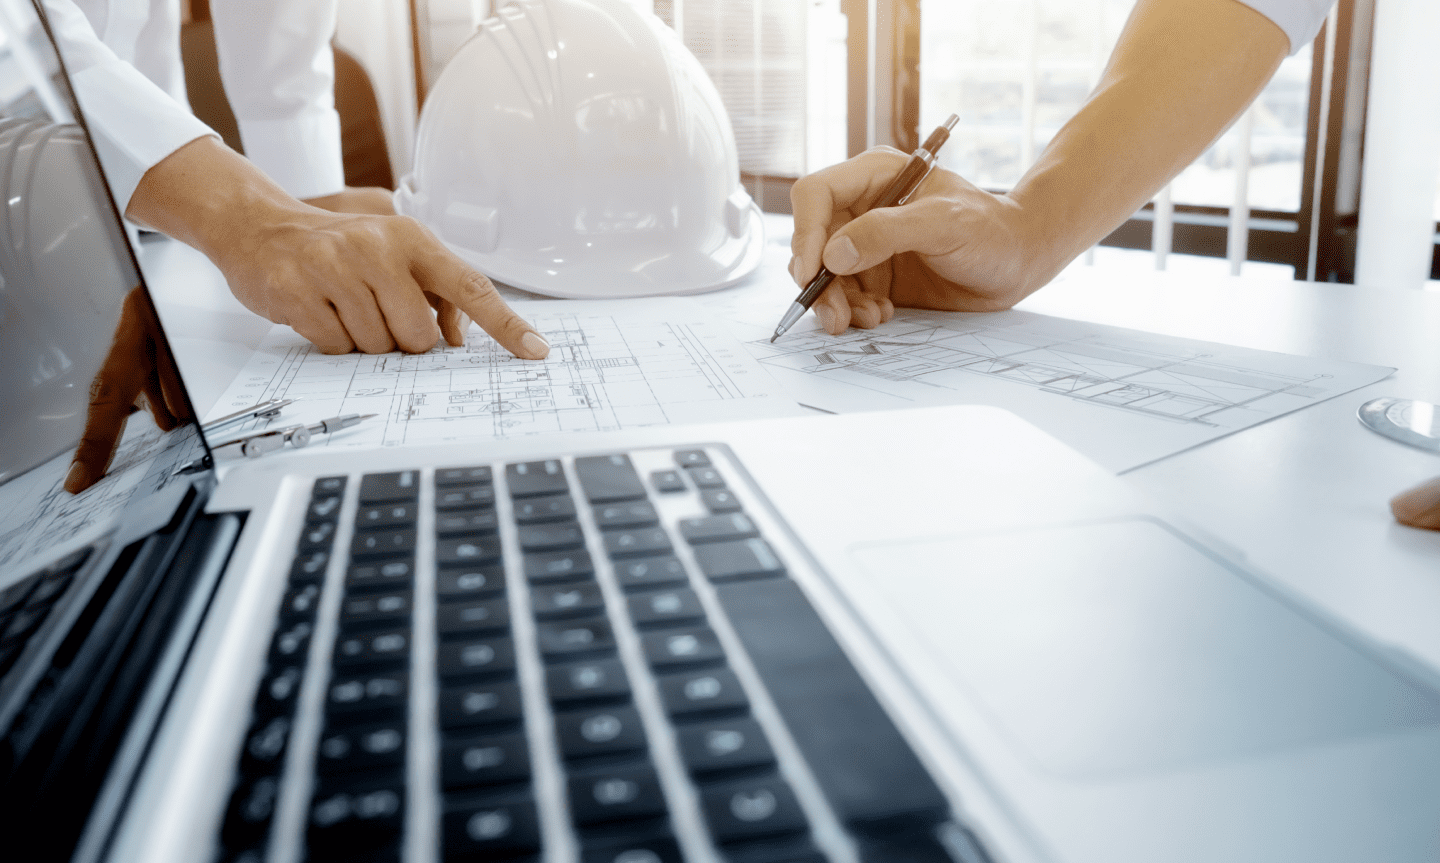 Intelvision provides construction software development